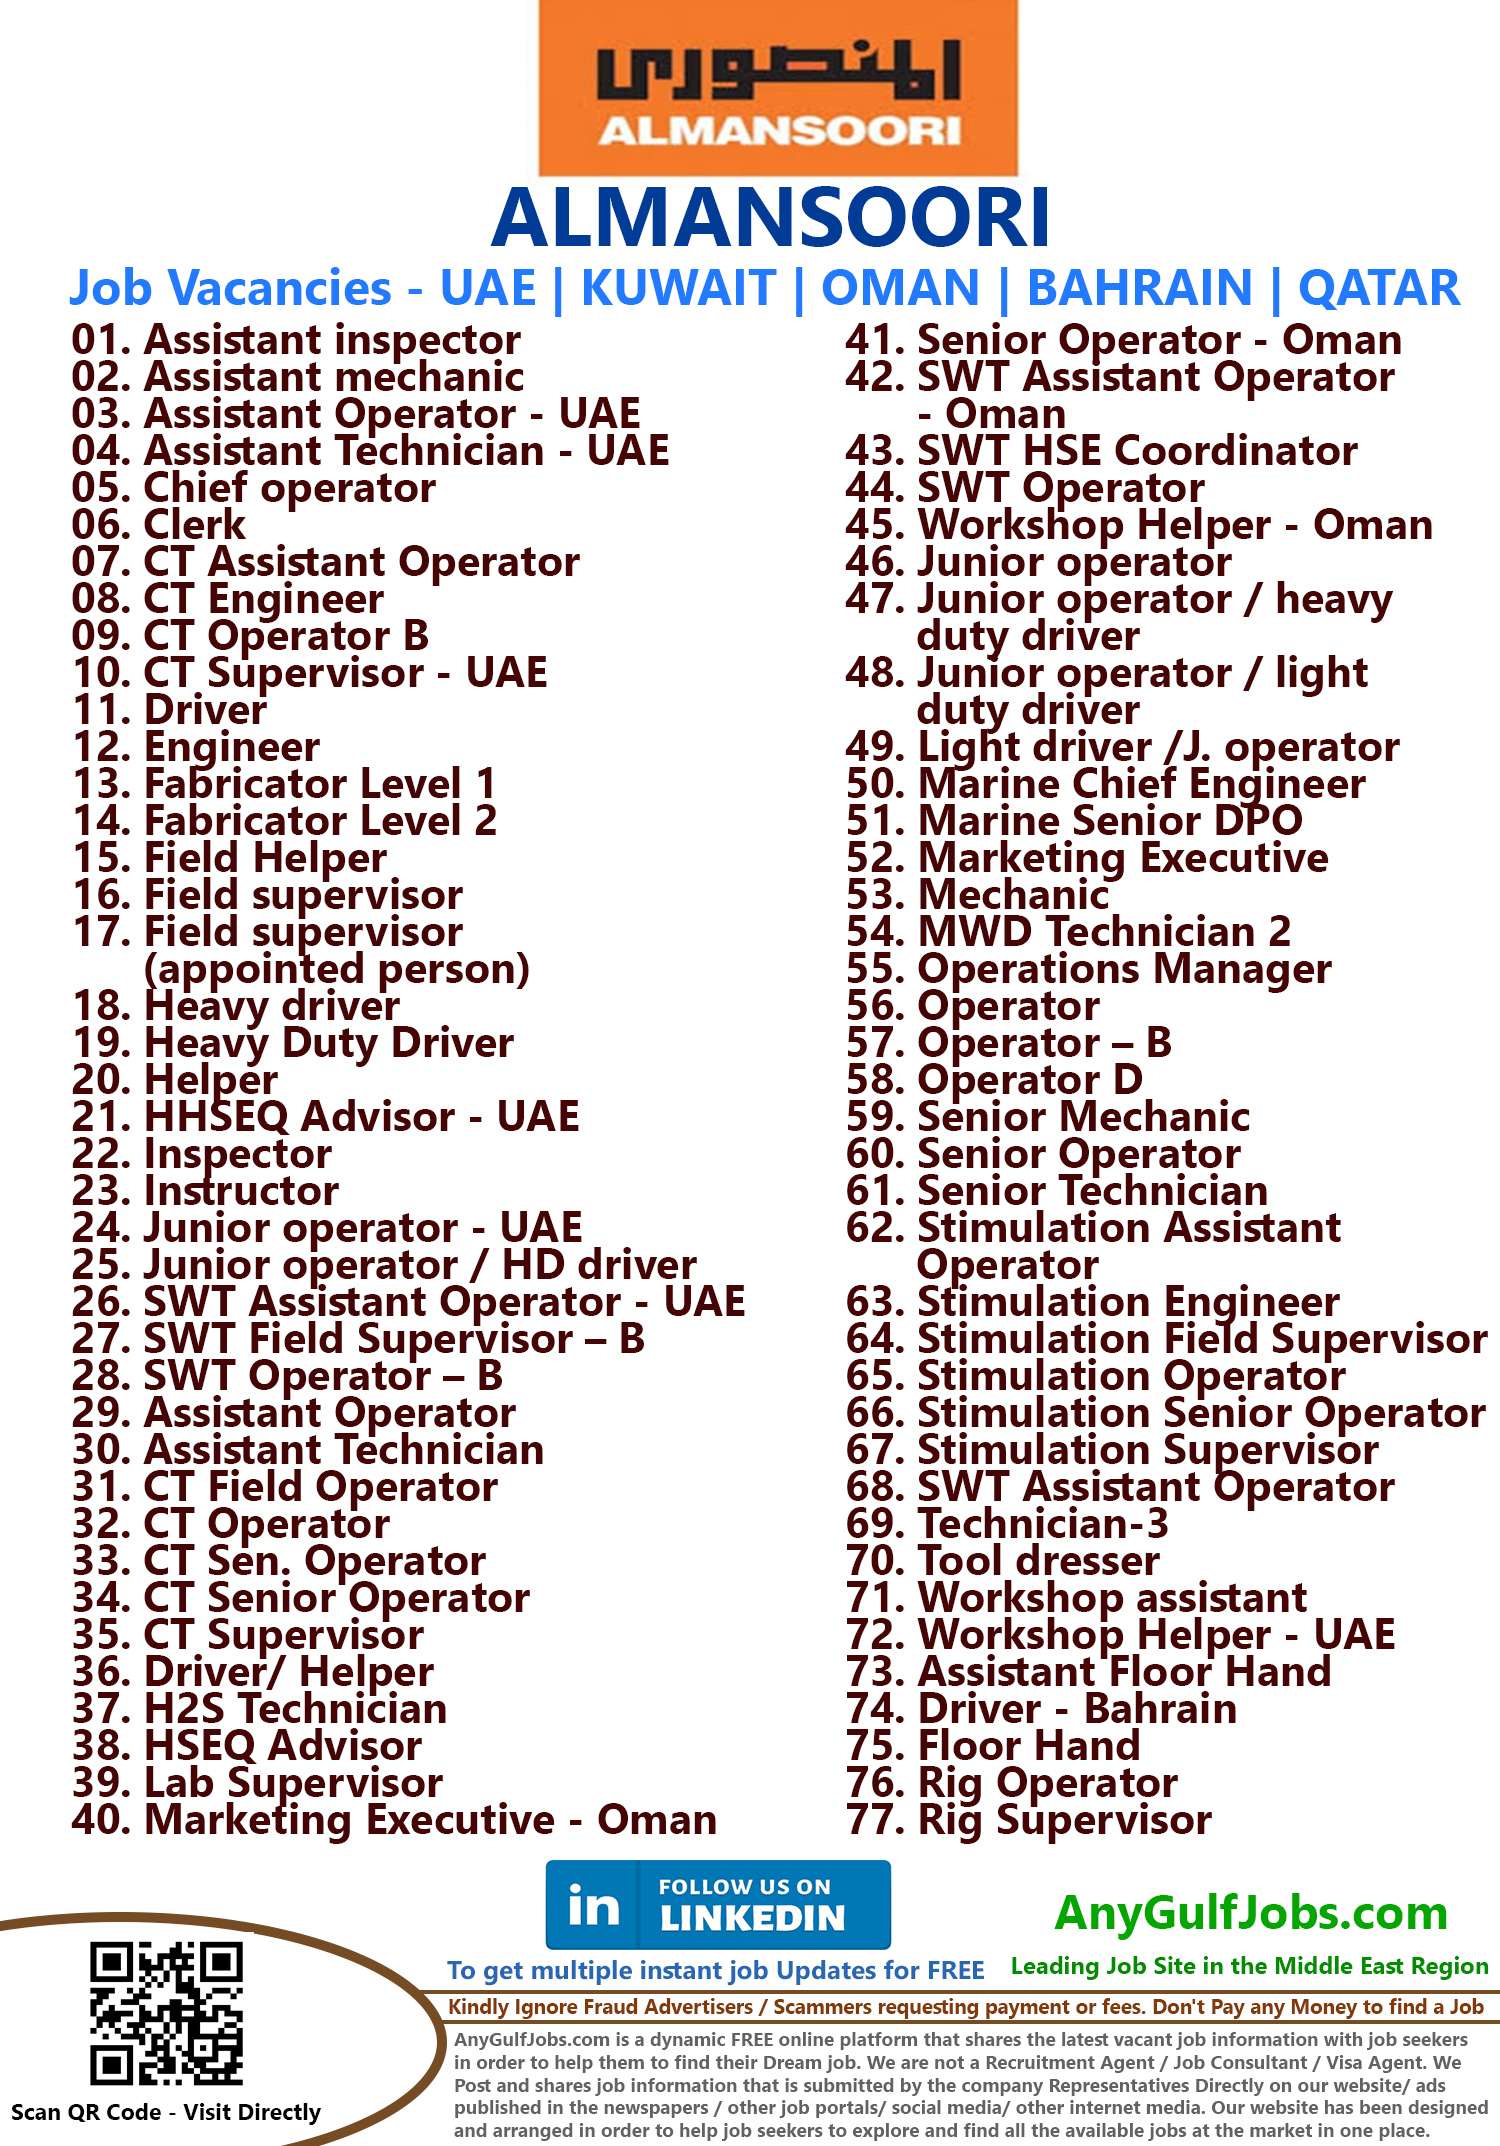 List of ALMANSOORI Jobs - UAE | BAHRAIN | OMAN | KUWAIT | QATAR